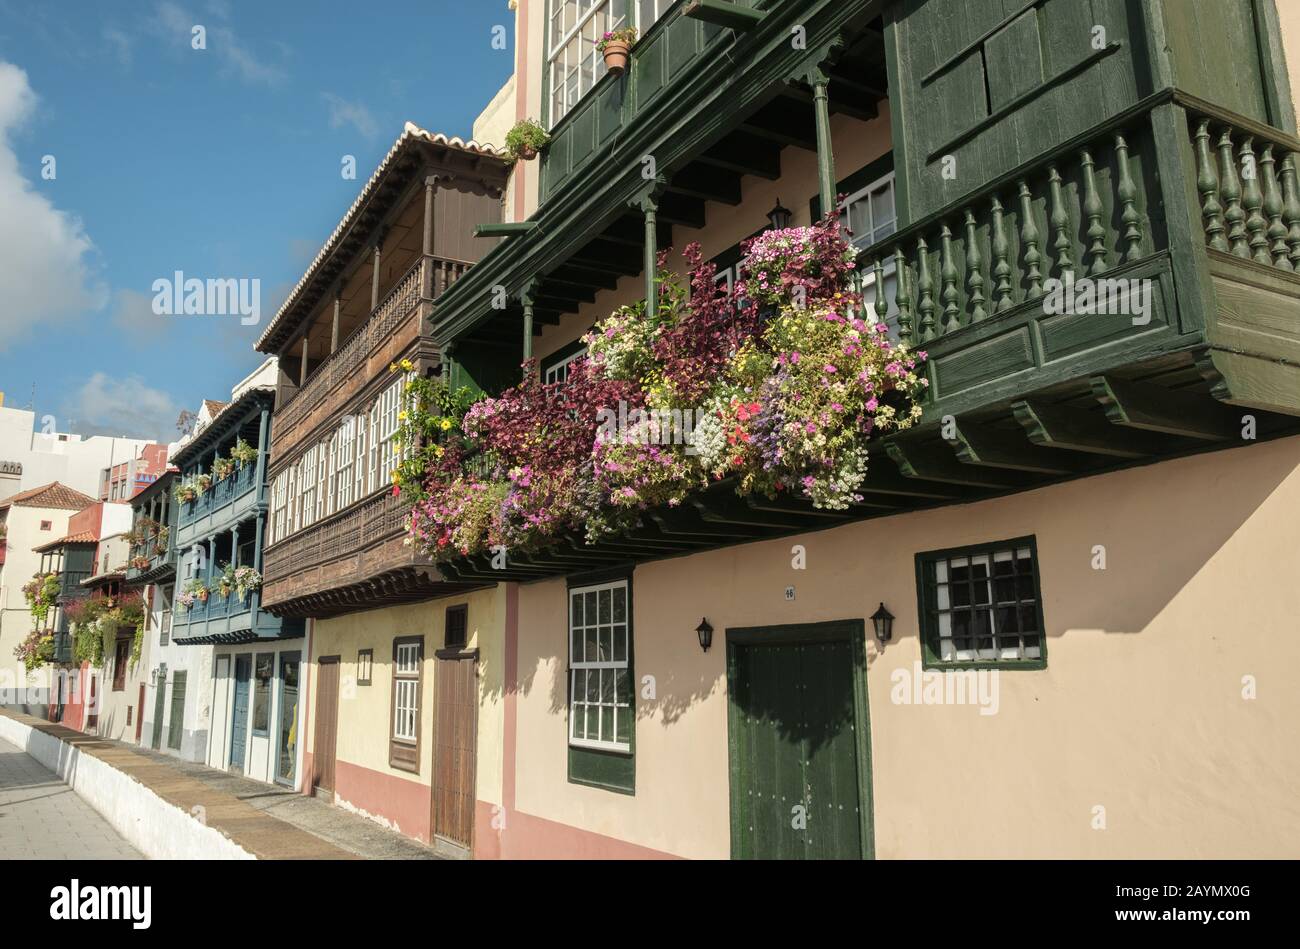 Traditional pretty spanish houses with hanging flowers and balconies, Santa Cruz de La Palma, on the island of La Palma, Canary Islands, Spain Stock Photo